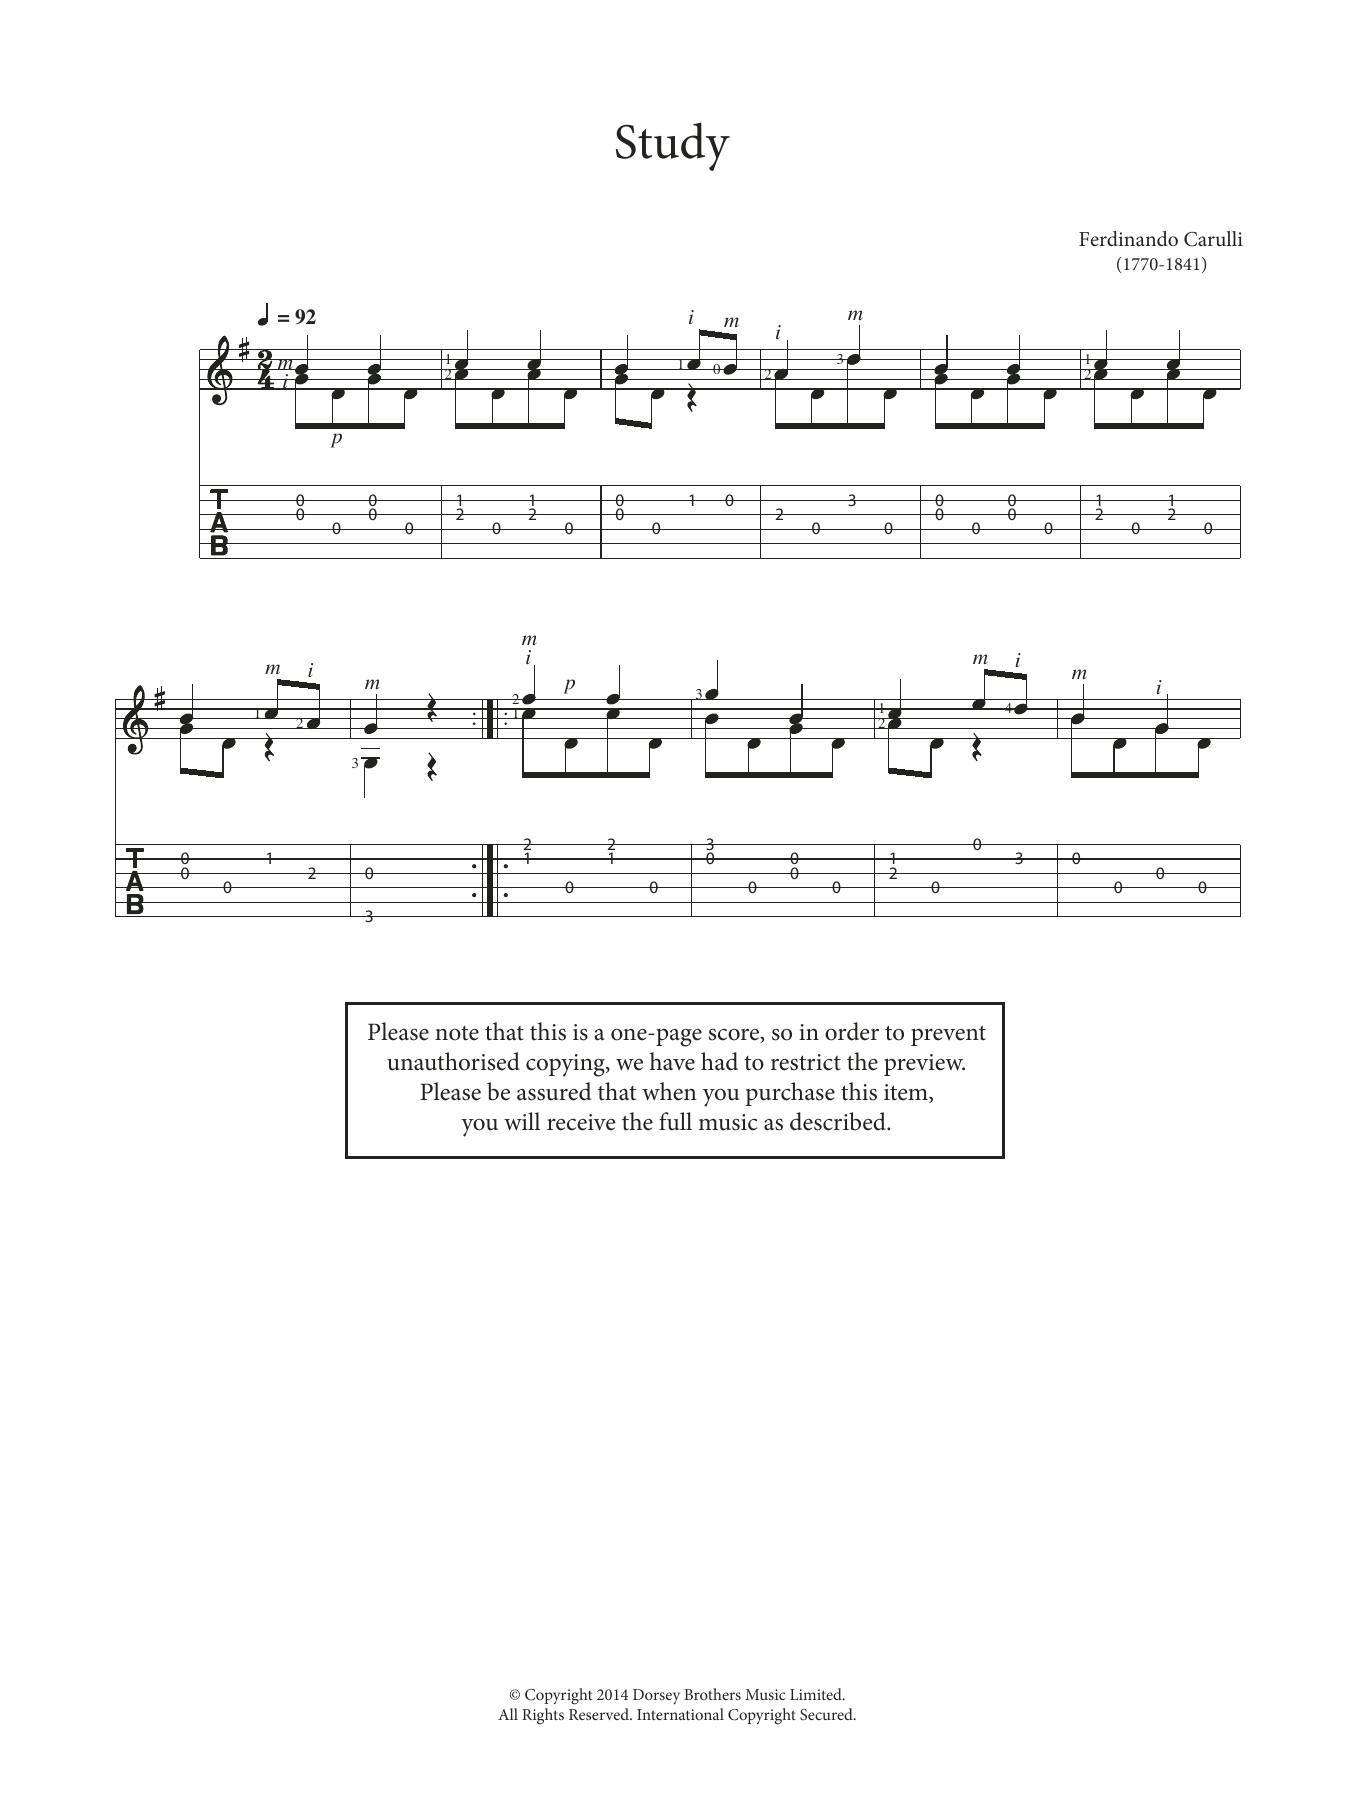 Ferdinando Carulli Study Sheet Music Notes & Chords for Guitar - Download or Print PDF